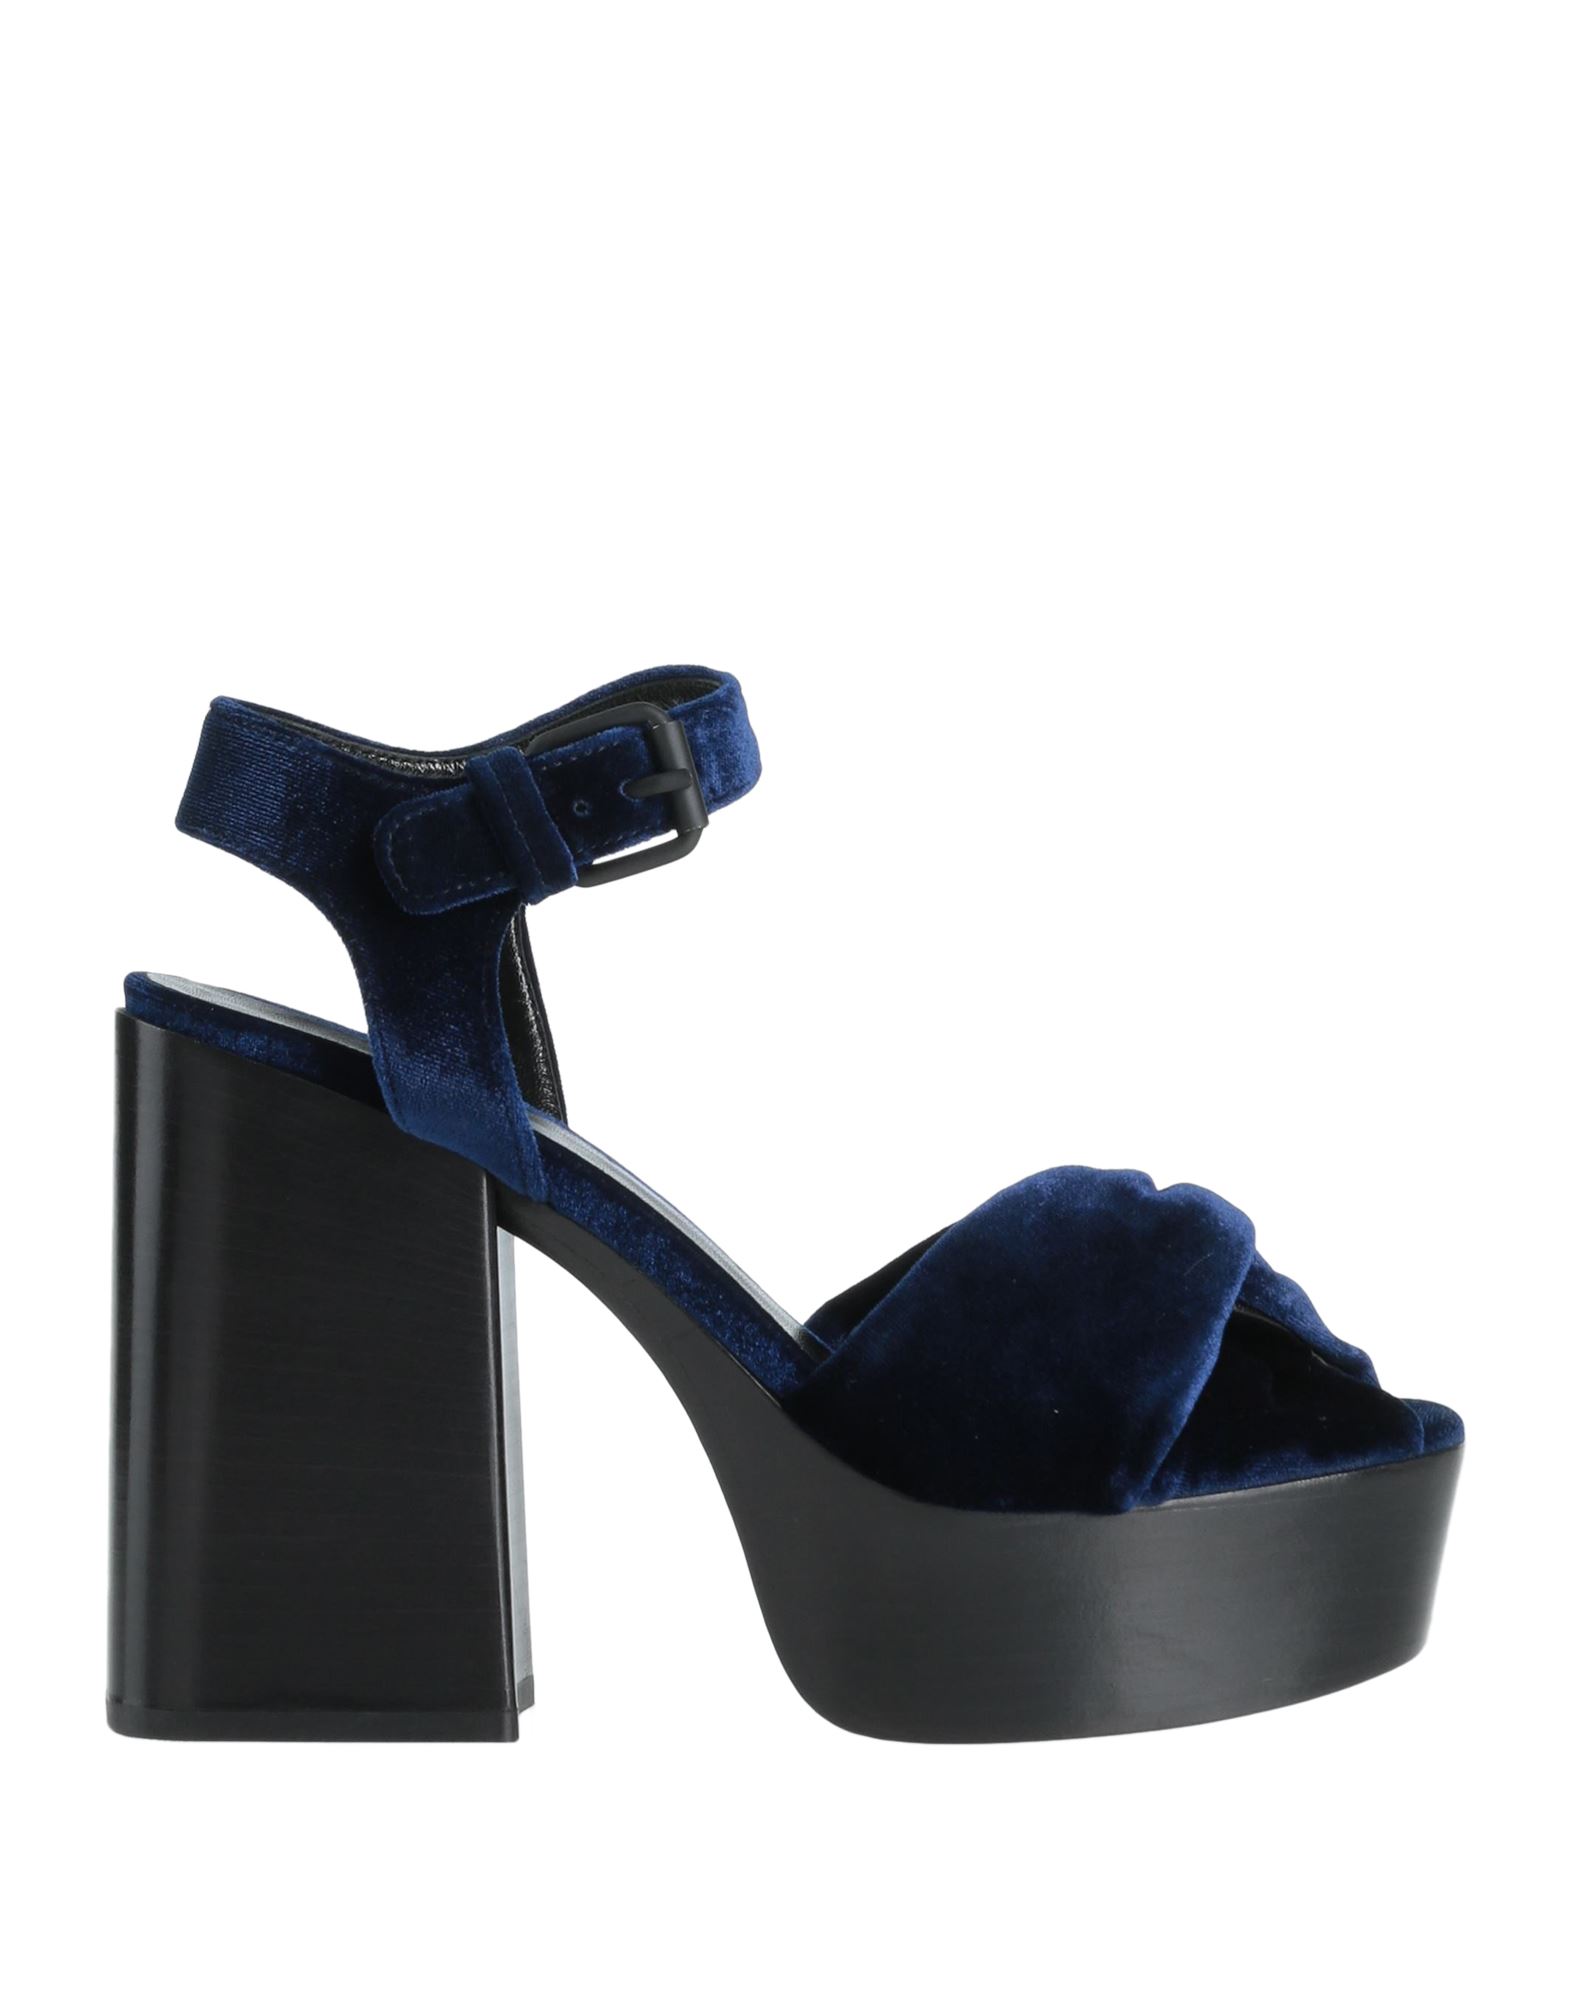 Sonia Rykiel Sandals In Dark Blue